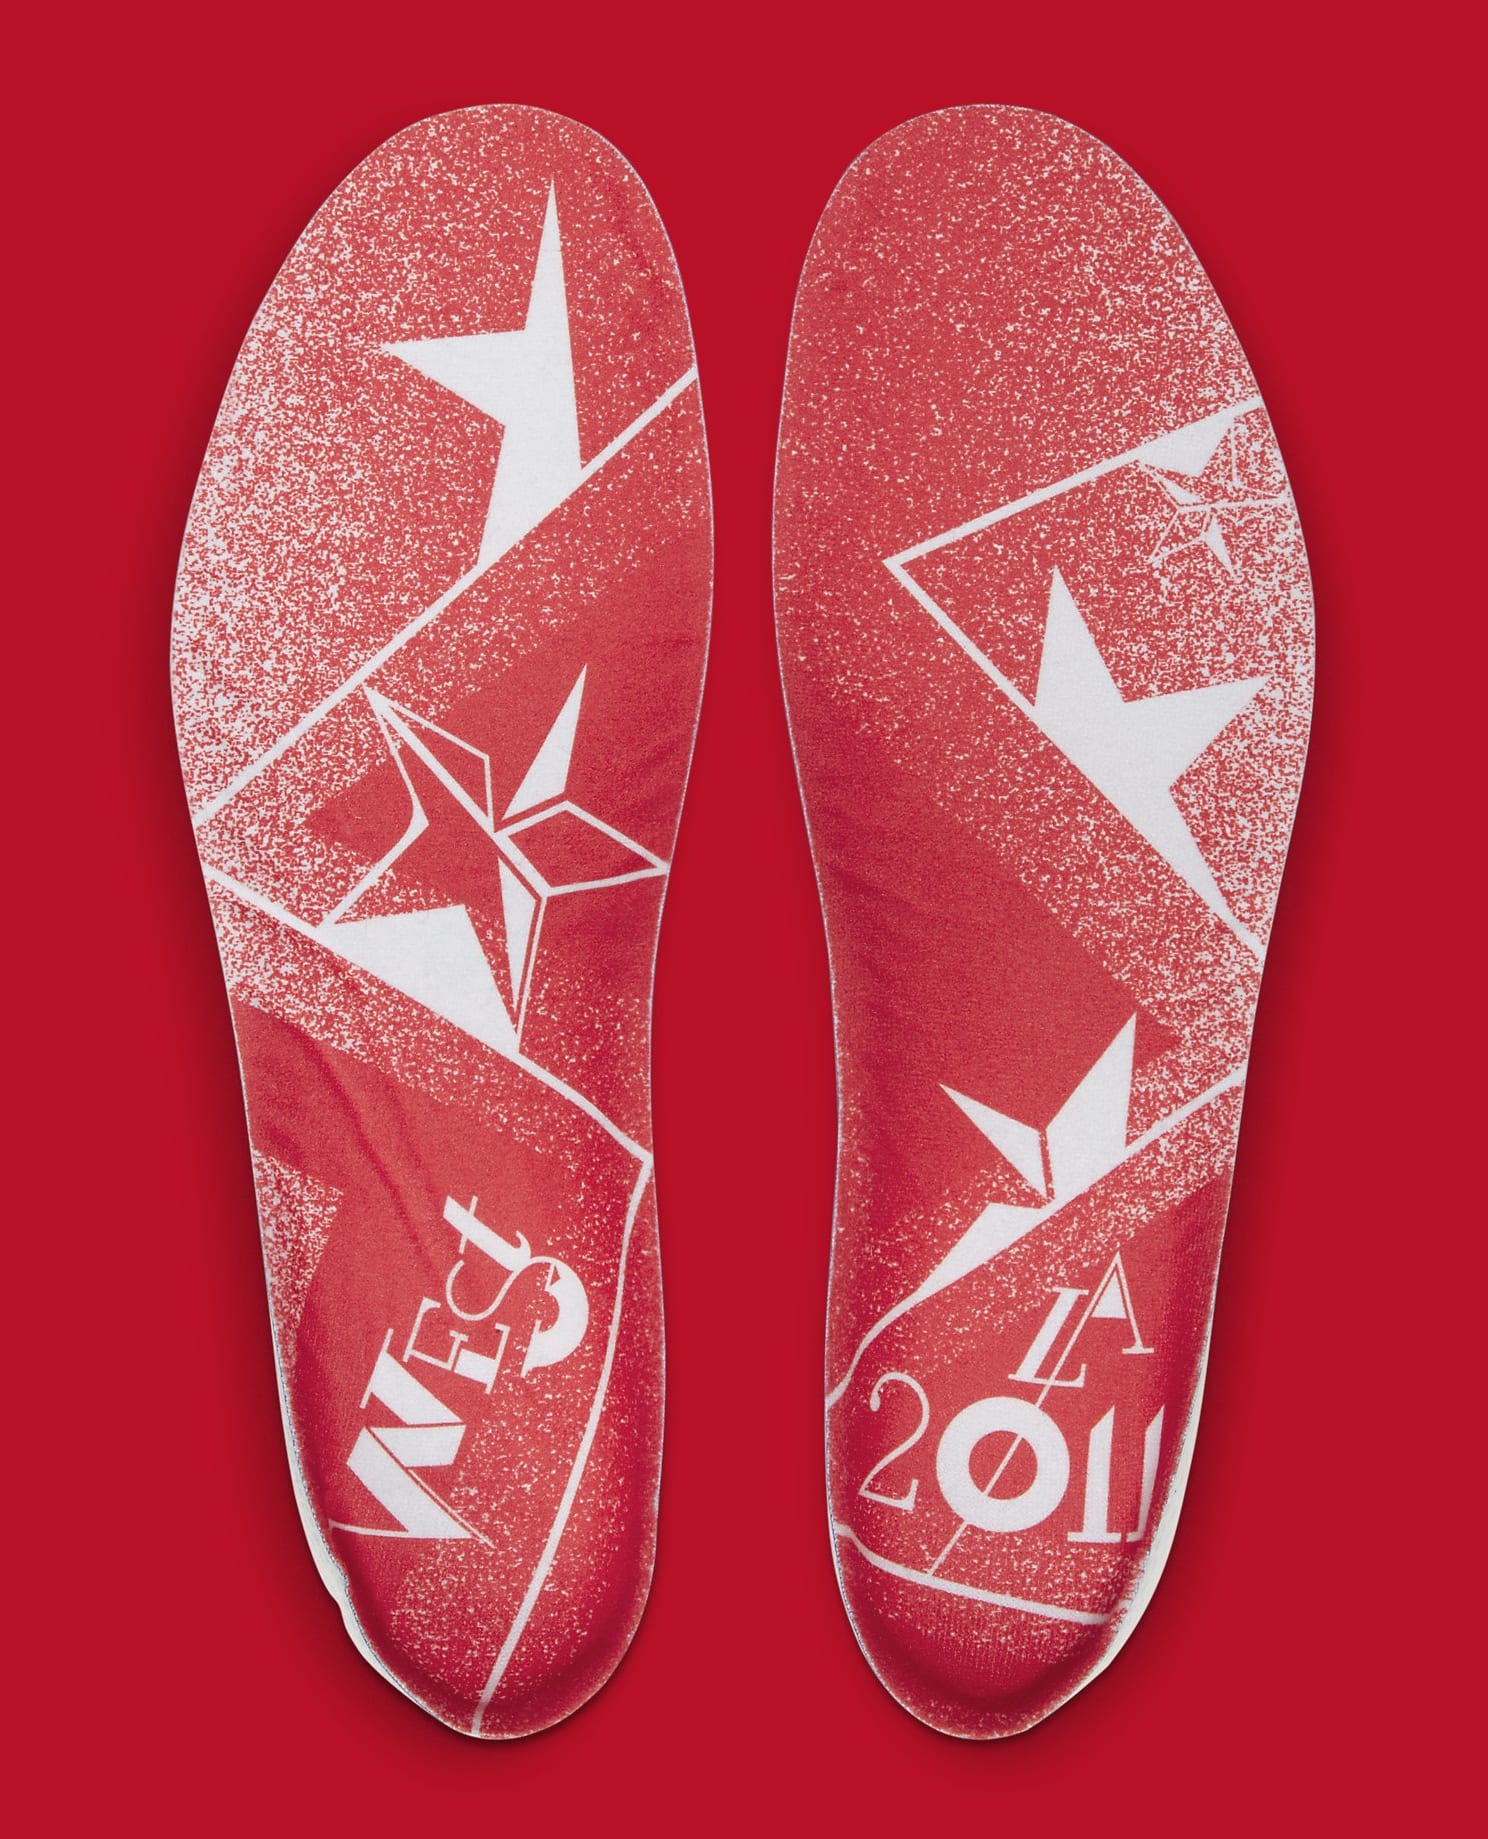 Nike Kobe 6 Protro 'All-Star' DH9888-600 Insole